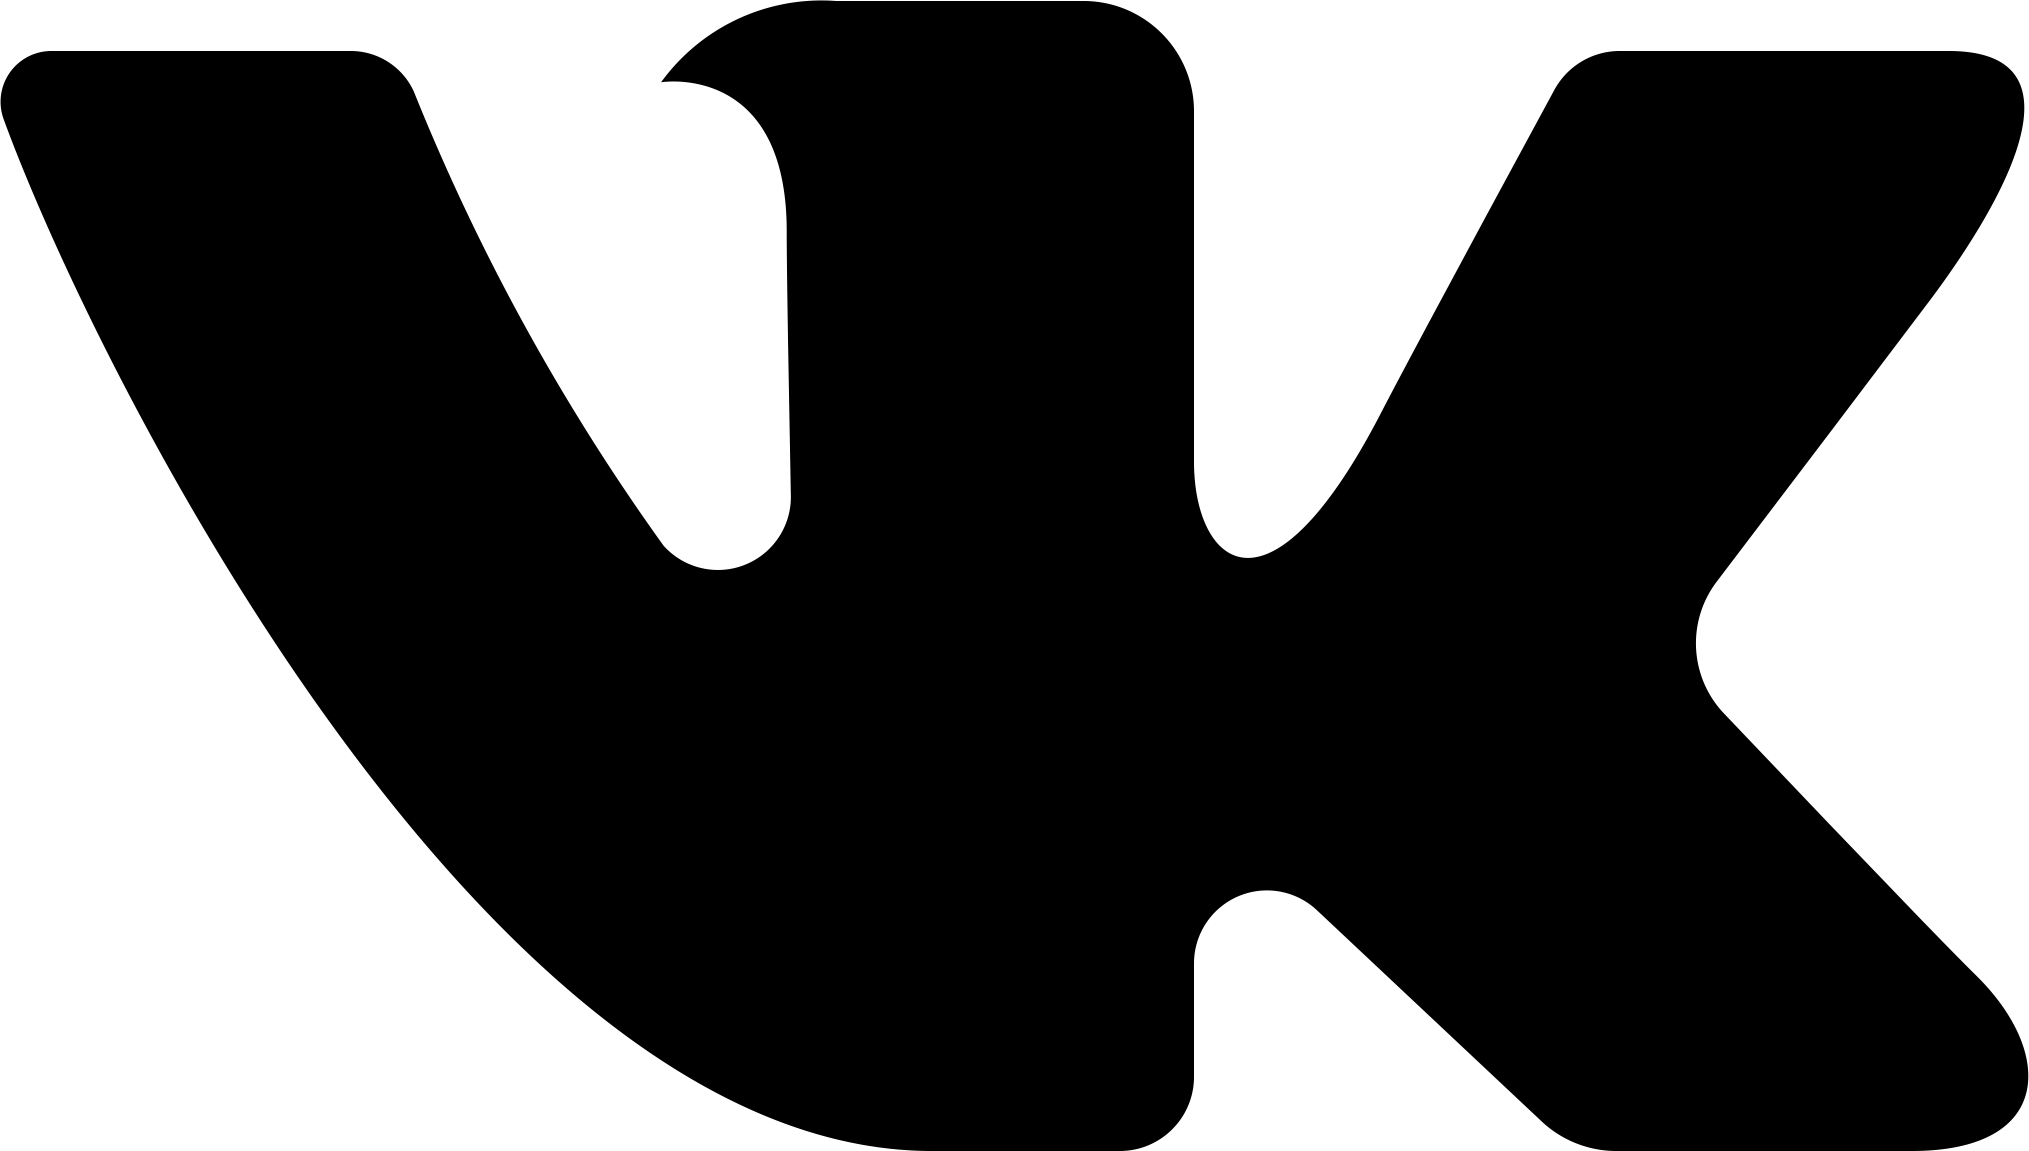 Актриса Роуз макгоуэн. Значок ВК. Значок Вики. OBK логотип. Tanukishop com